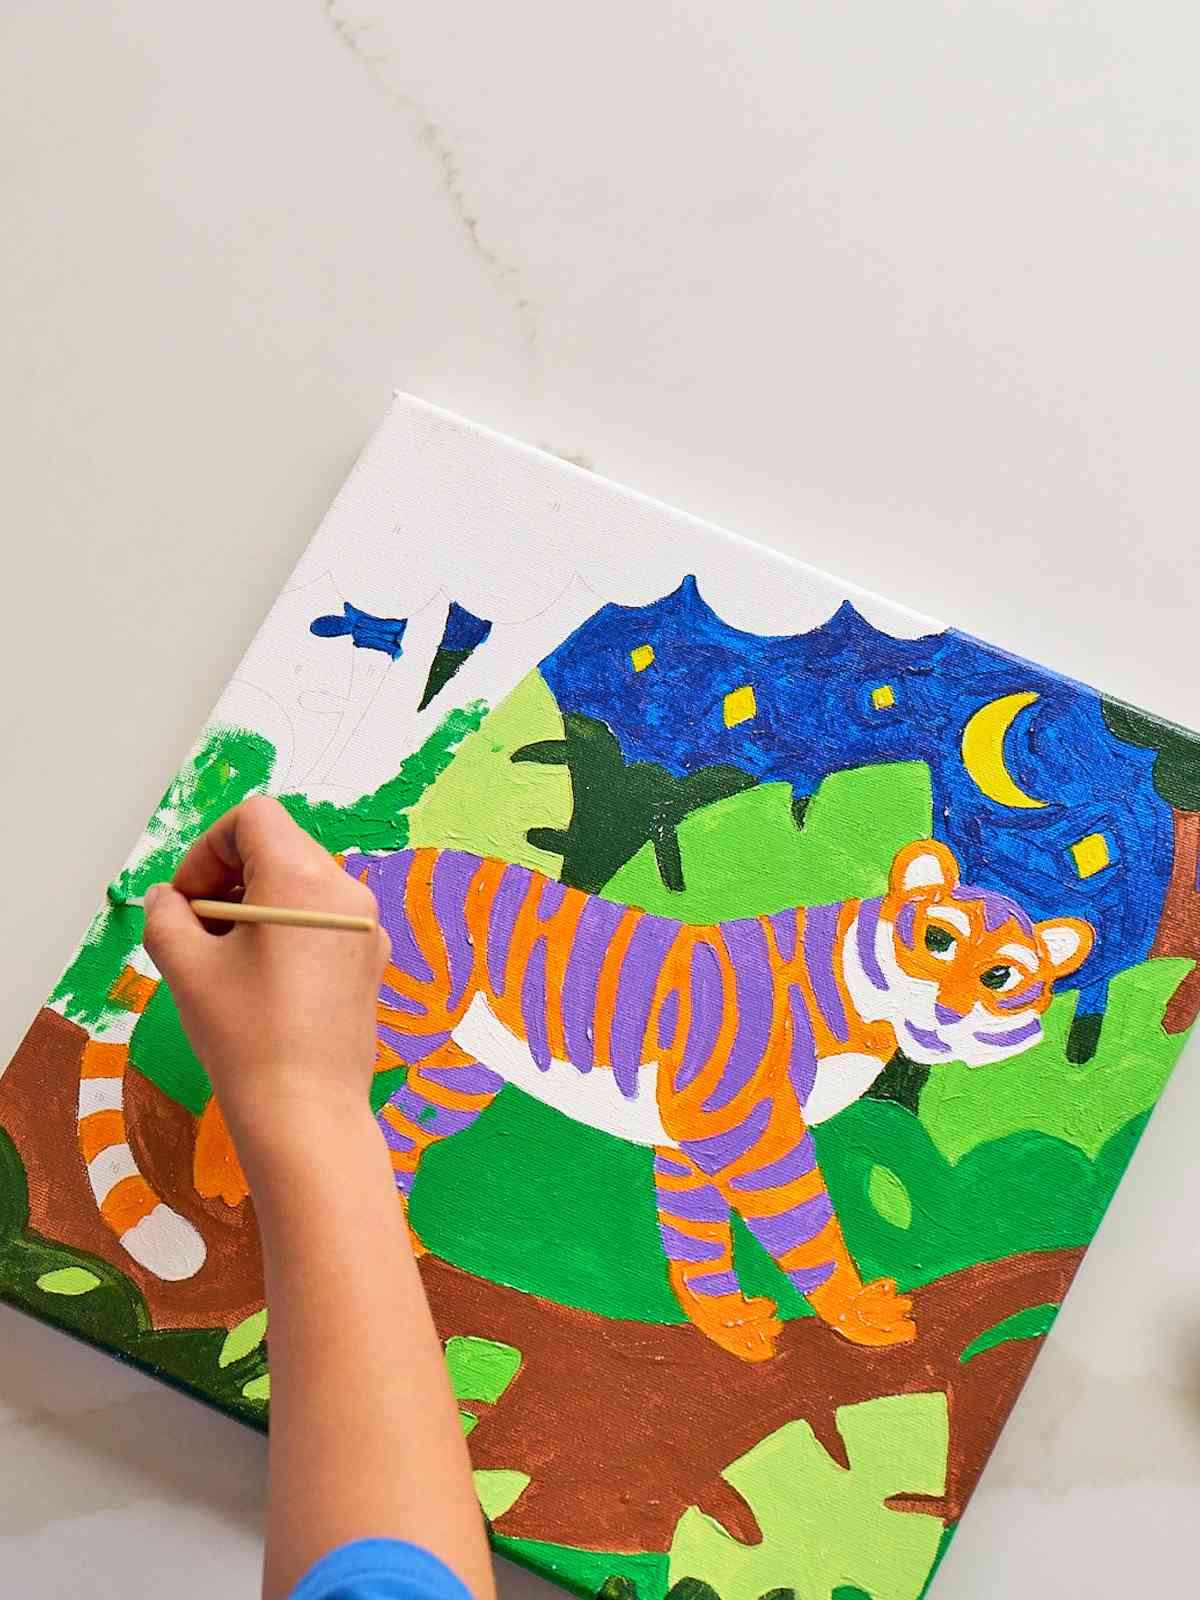 Ooly Colorific Canvas Paint by Number Kit Magical Unicorn (Licorne magique)